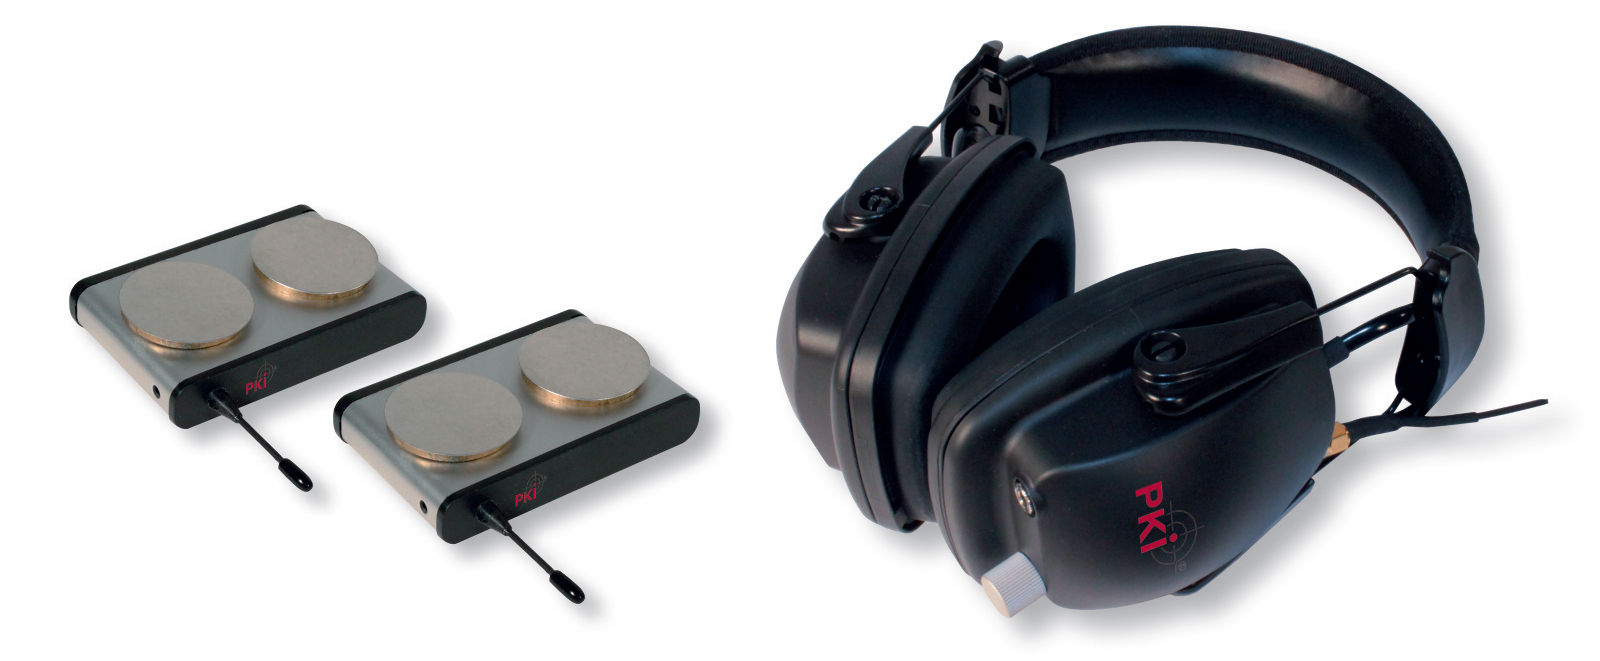 PKI-2370-Wireless-Super-Stethoscope-stereo